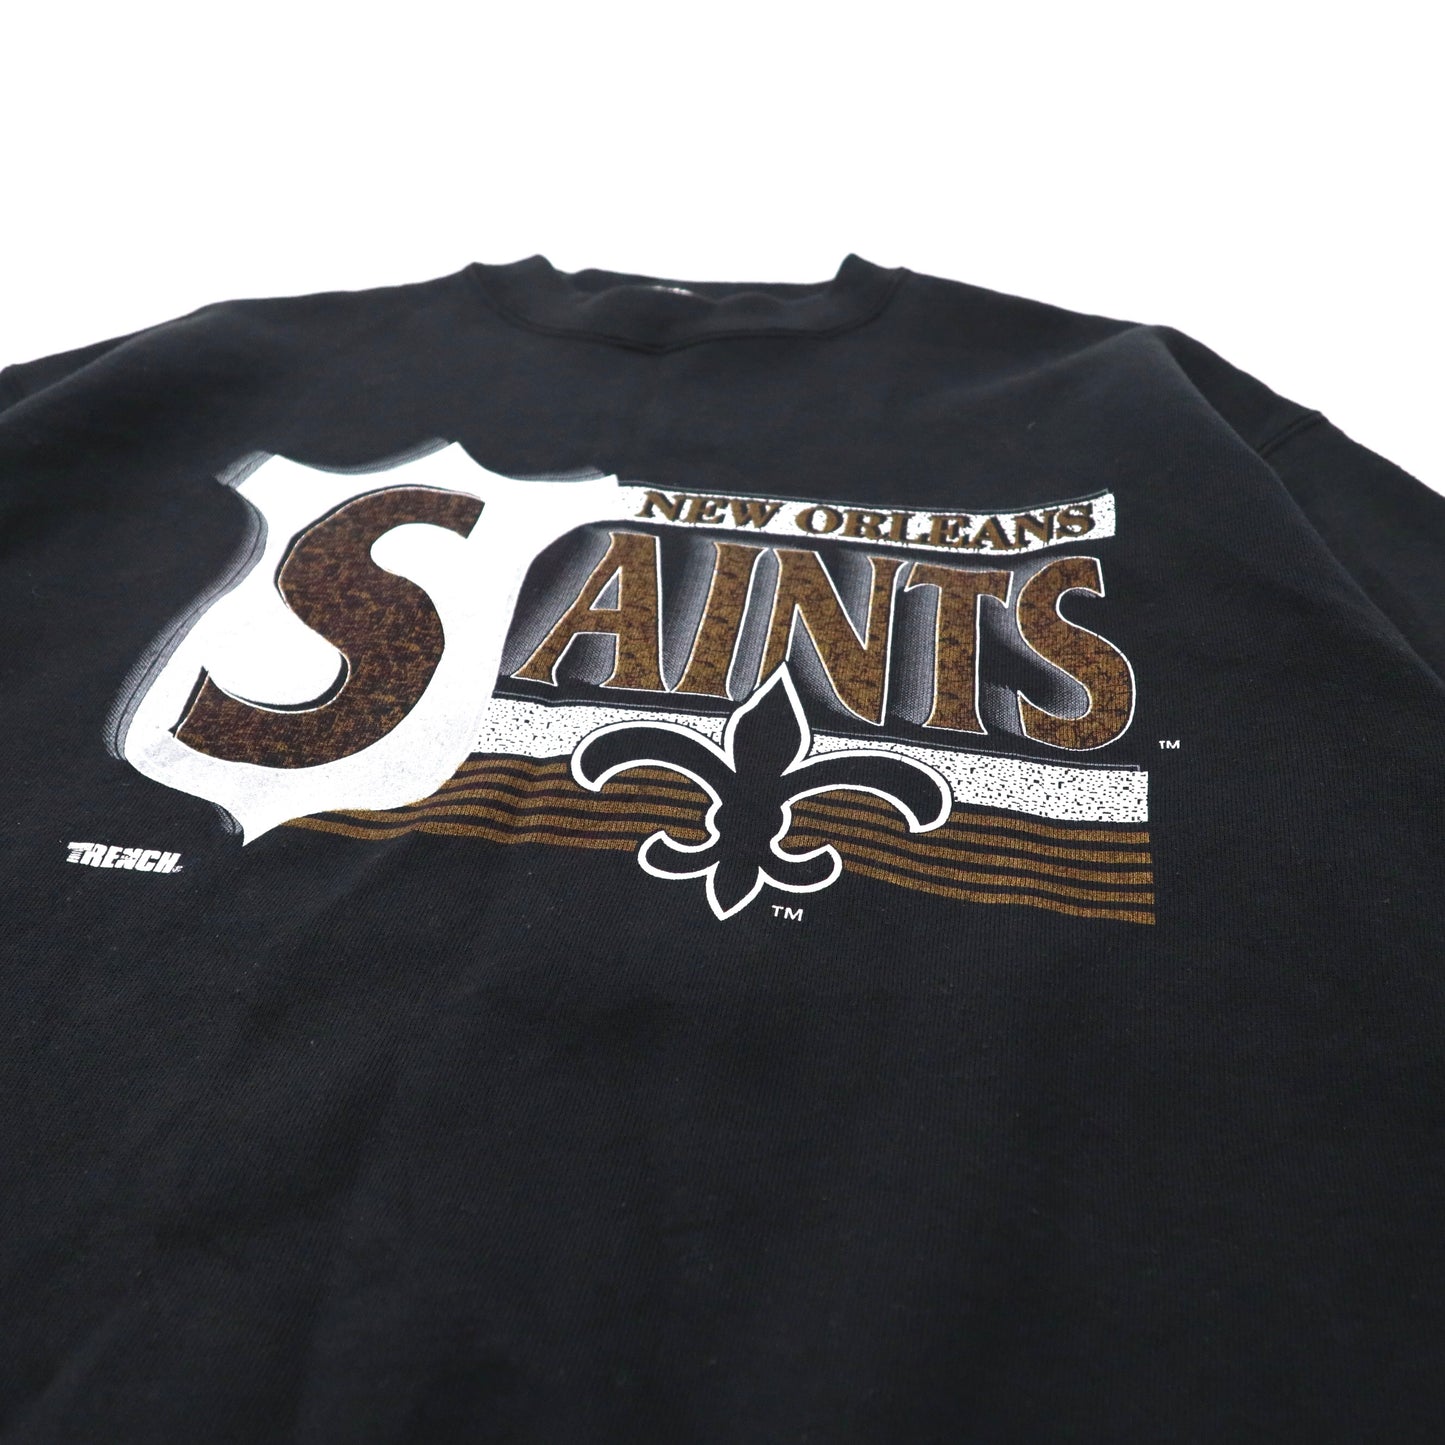 TRENCH ULTRA プリントスウェット L ブラック コットン 裏起毛 フットボール NFL New Orleans Saints ビッグサイズ 90年代 USA製